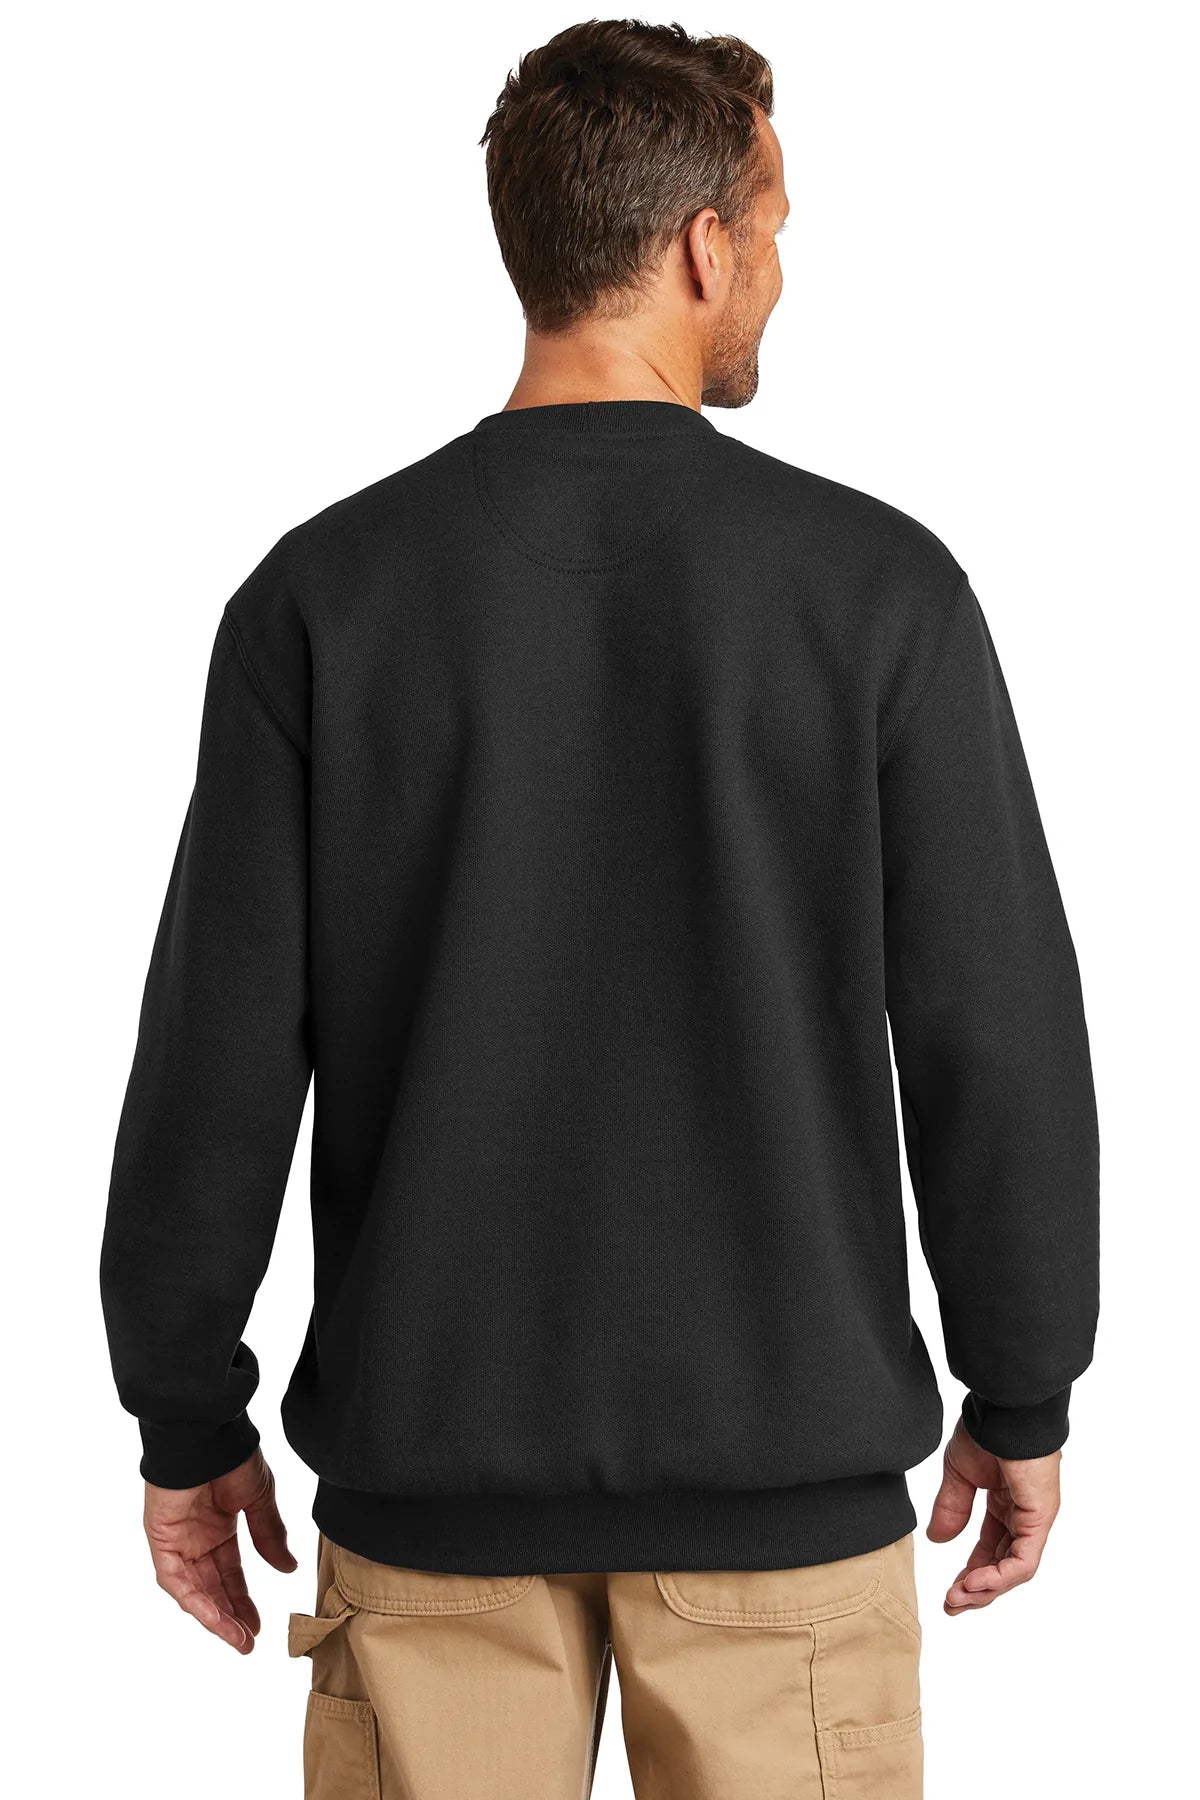 carhartt_ctk124 _black_company_logo_sweatshirts